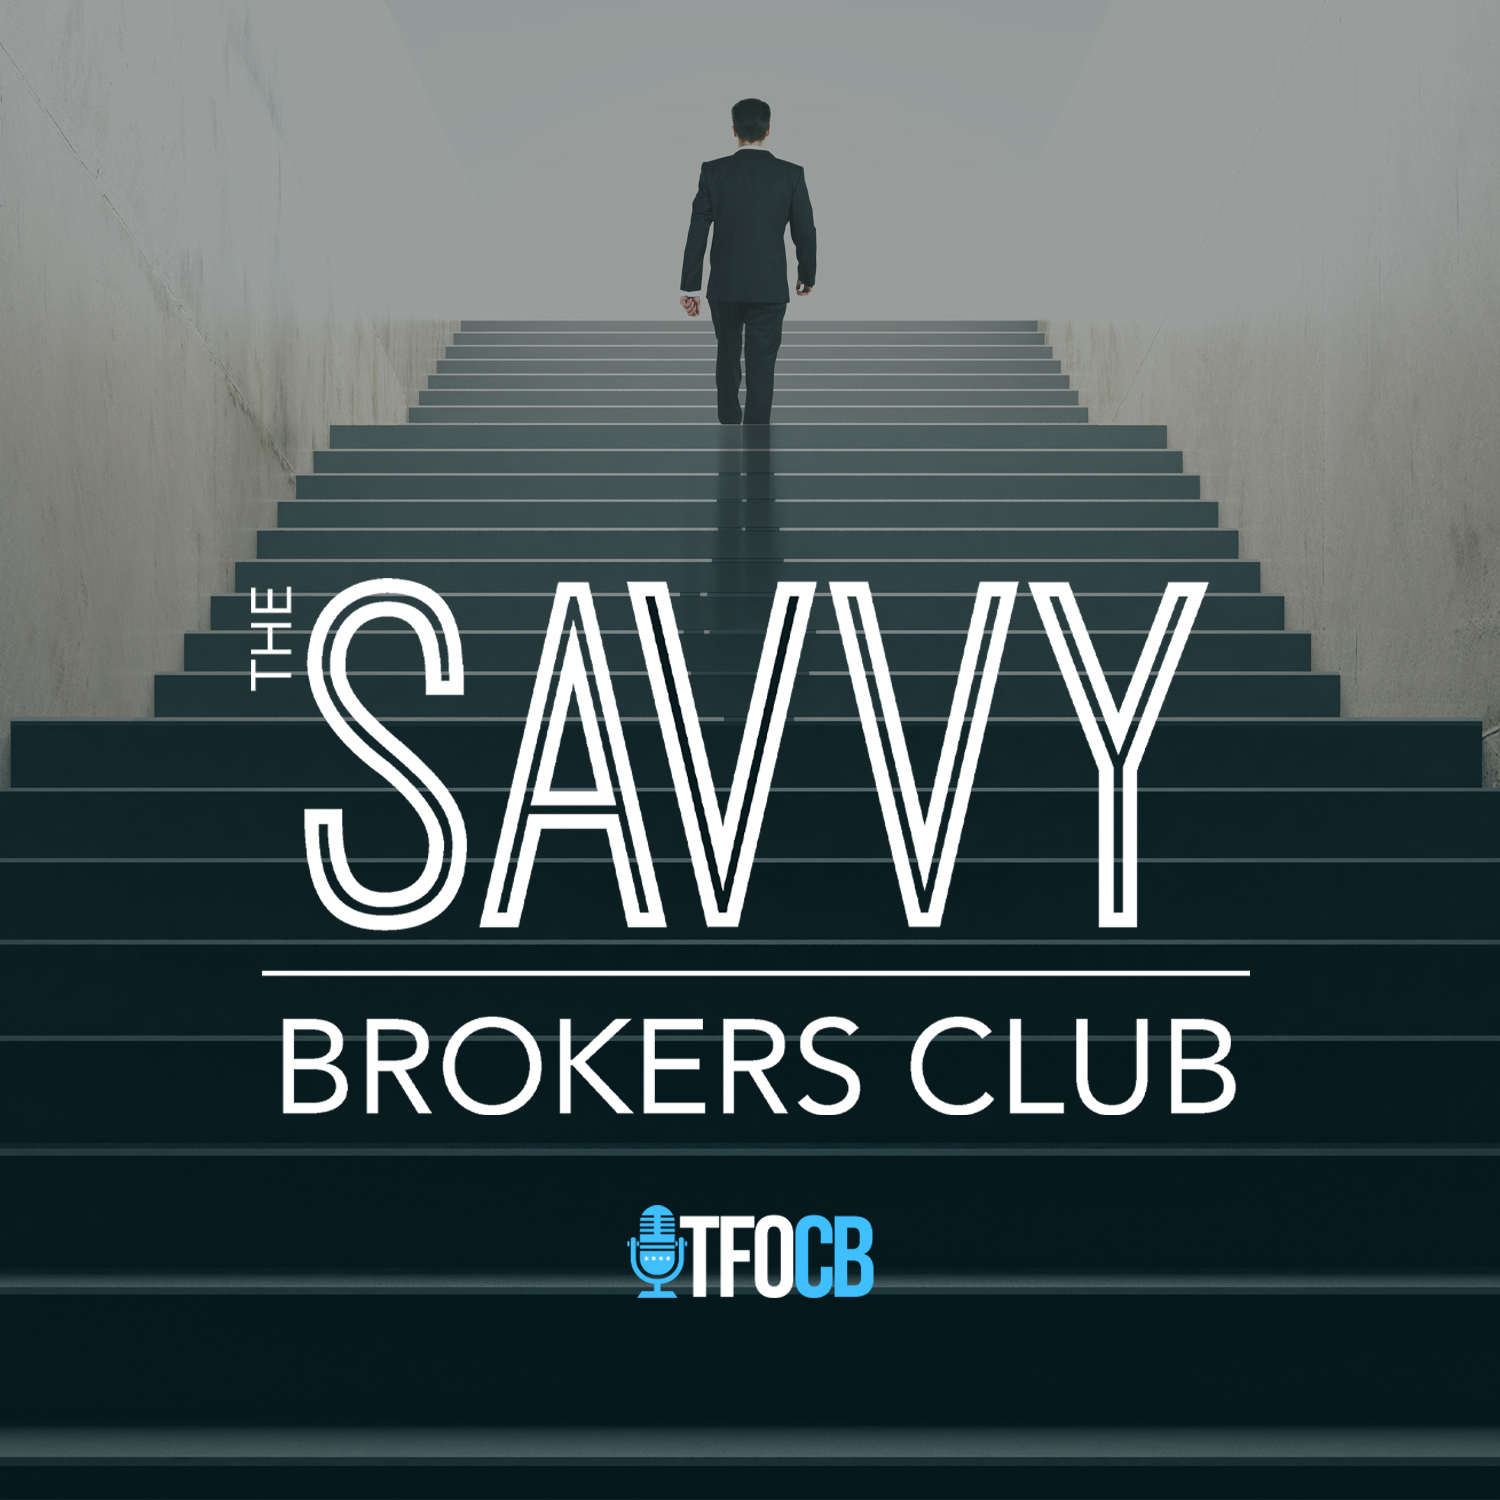 Savvy Brokers Club